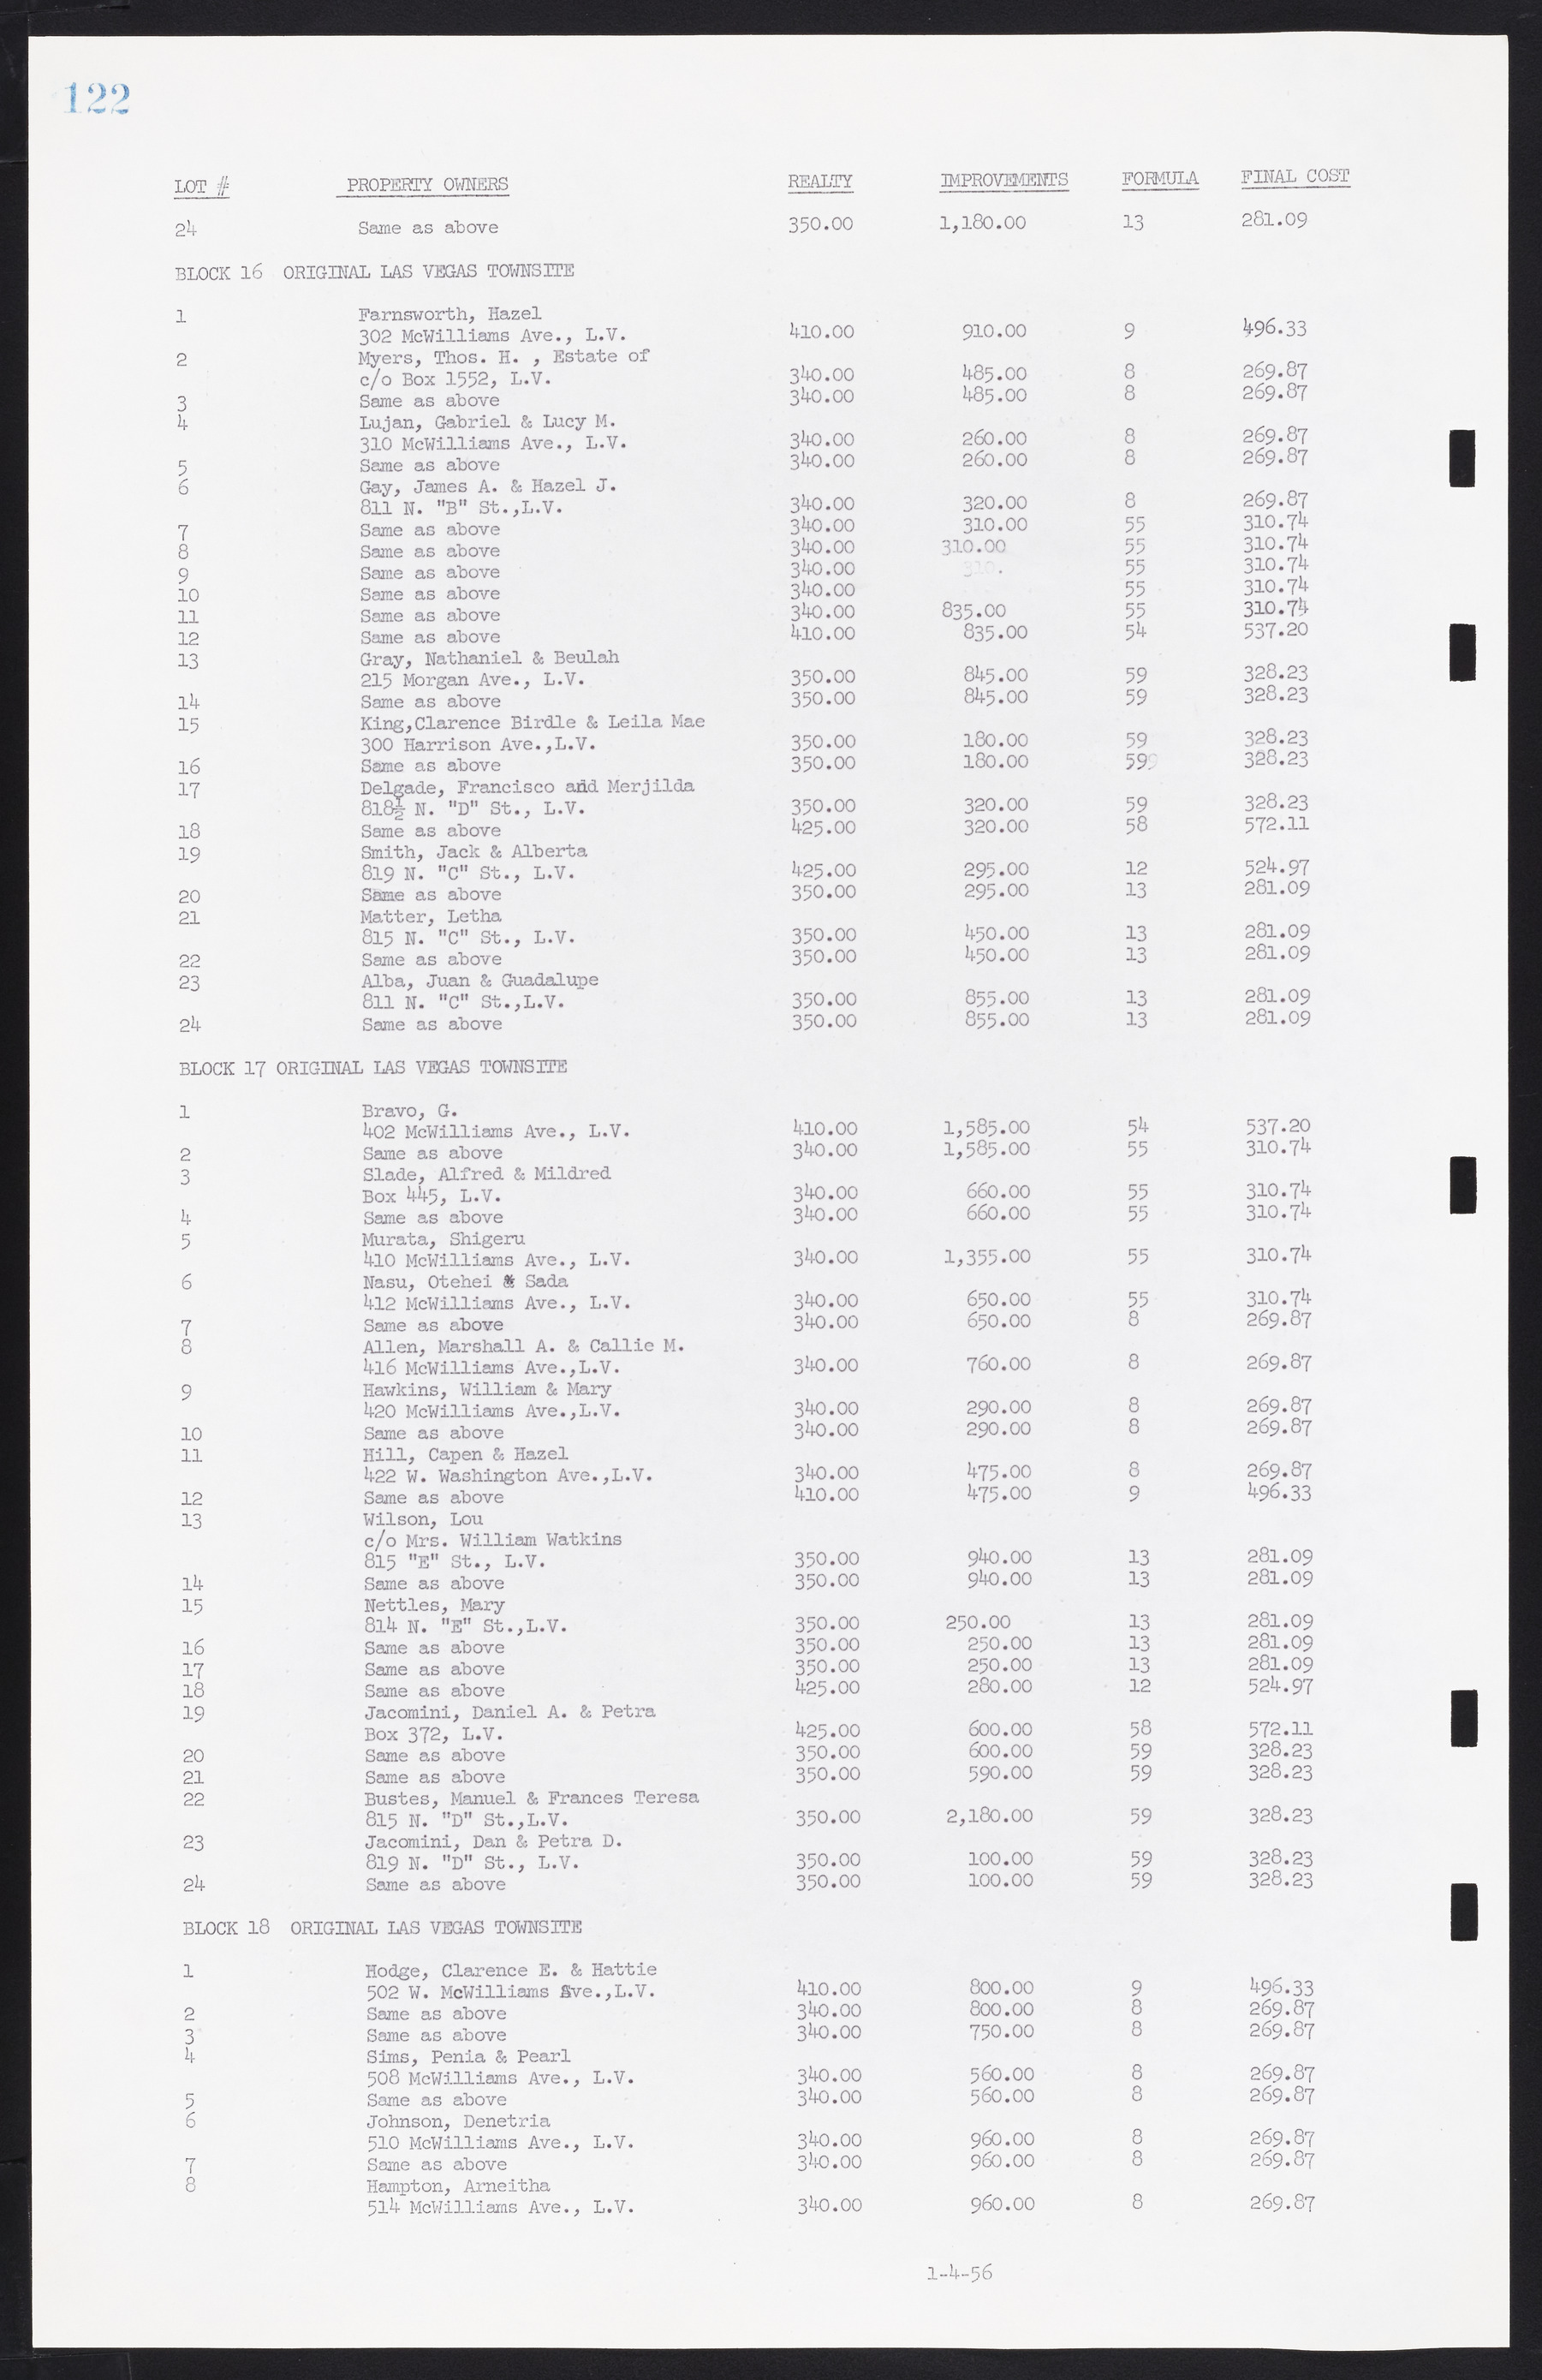 Las Vegas City Commission Minutes, September 21, 1955 to November 20, 1957, lvc000010-132